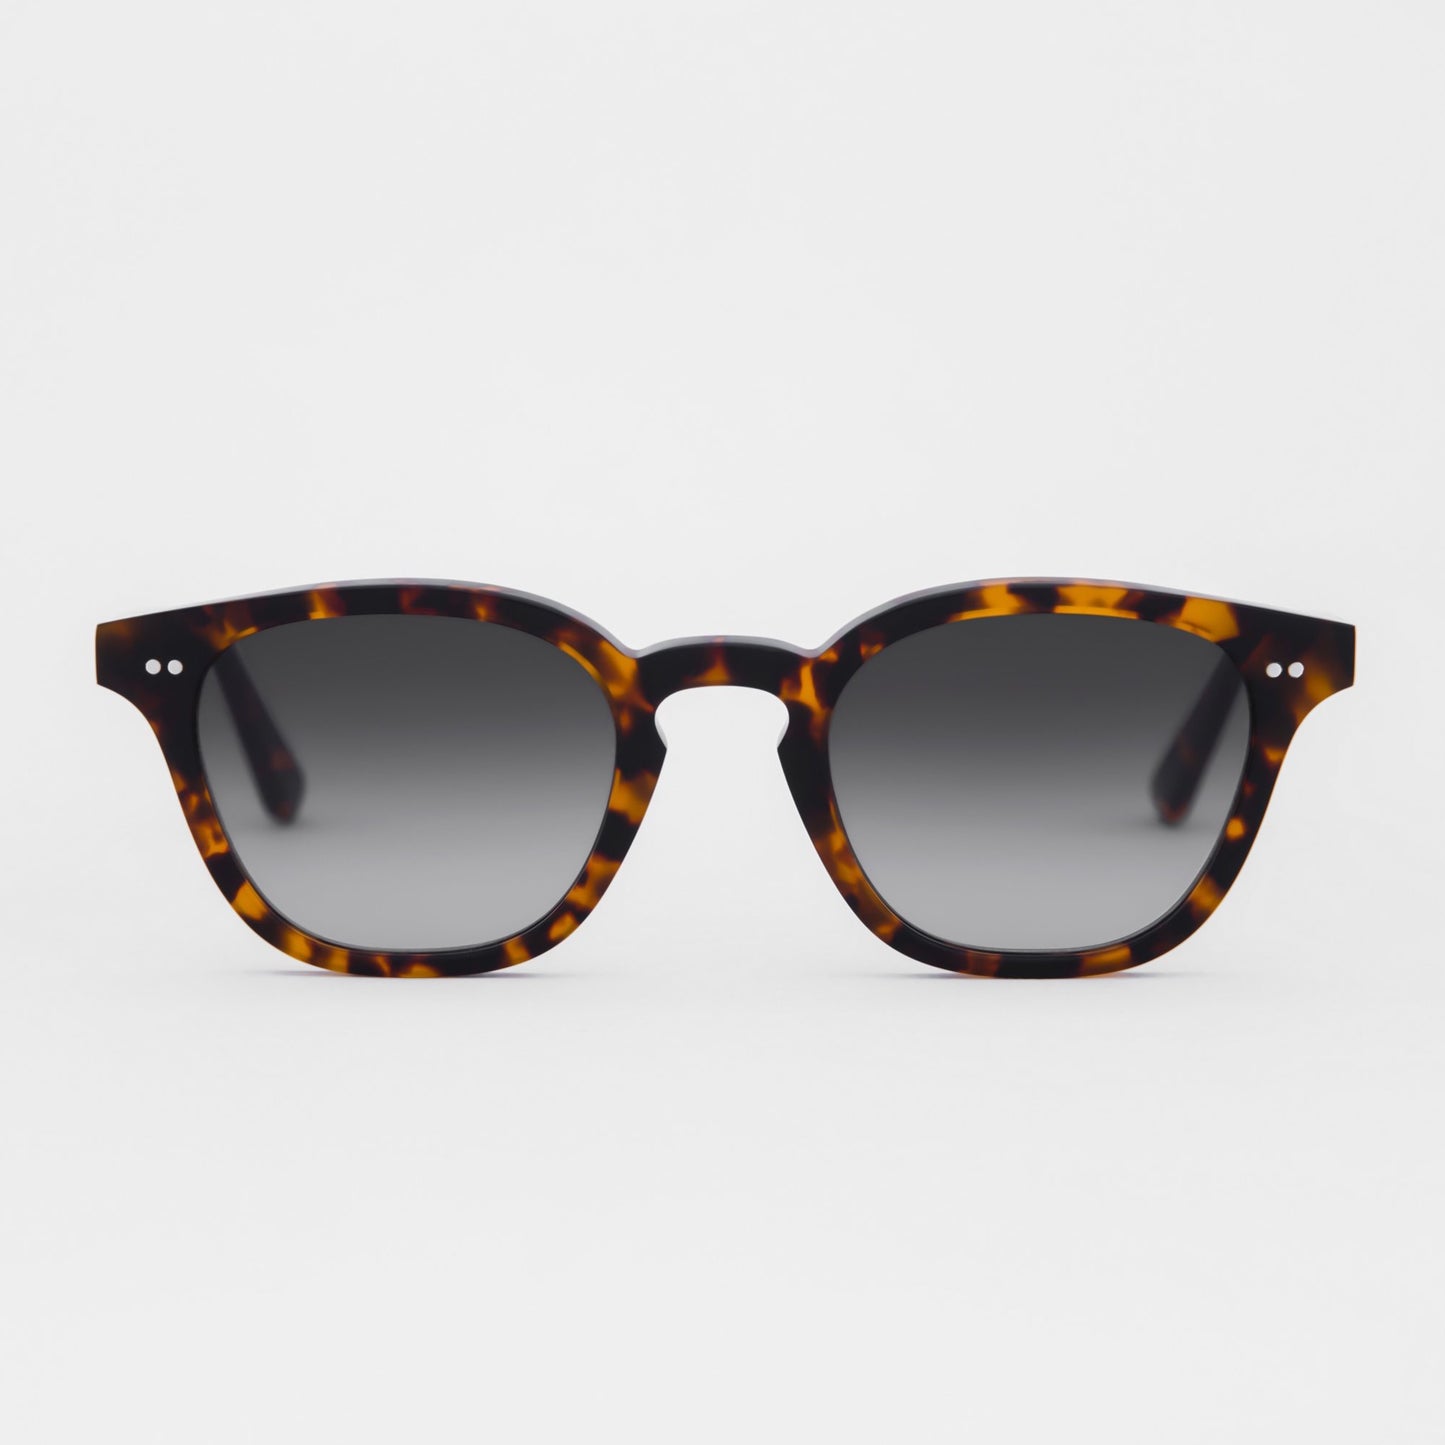 Monokel River Sunglasses